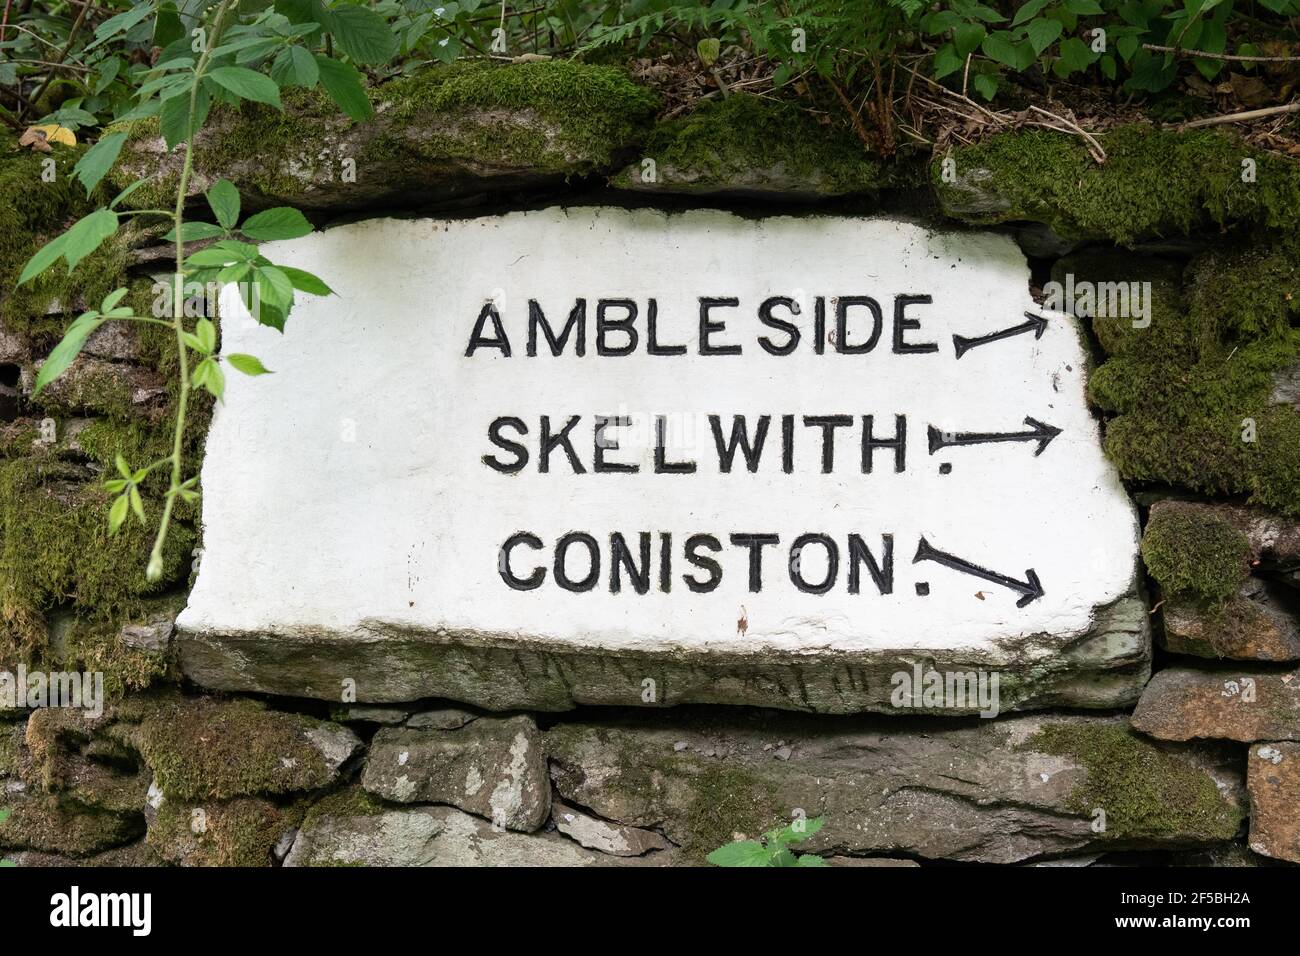 Old Lake District panneau indiquant Ambleside, Skelwith et Coniston - Red Bank près de Grasmere - Angleterre, Royaume-Uni Banque D'Images